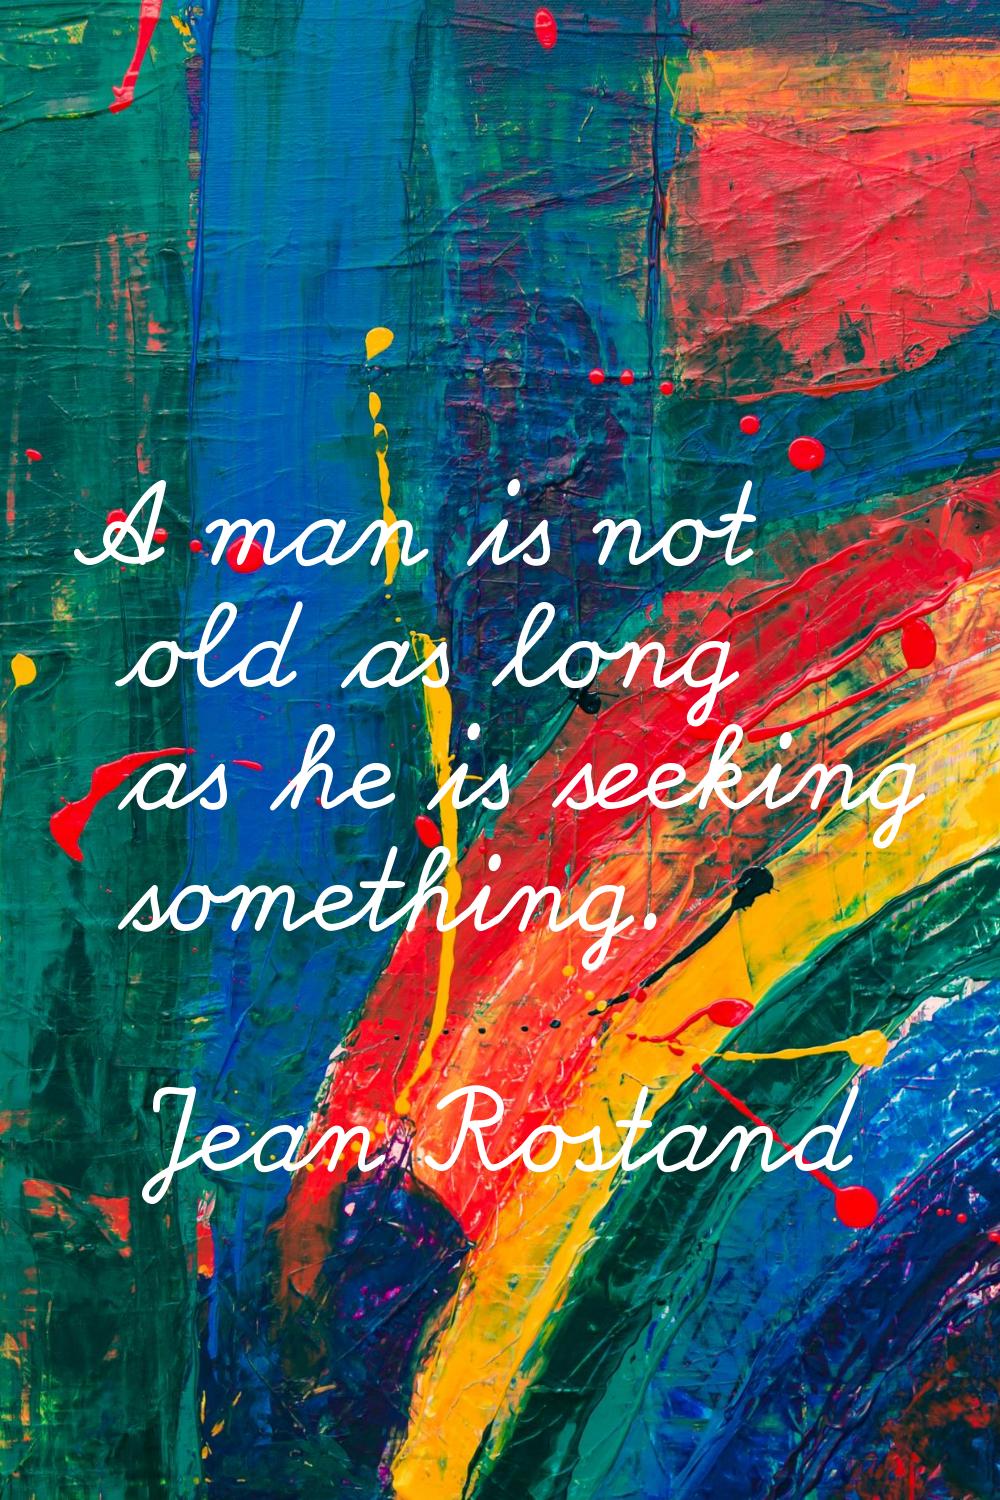 A man is not old as long as he is seeking something.